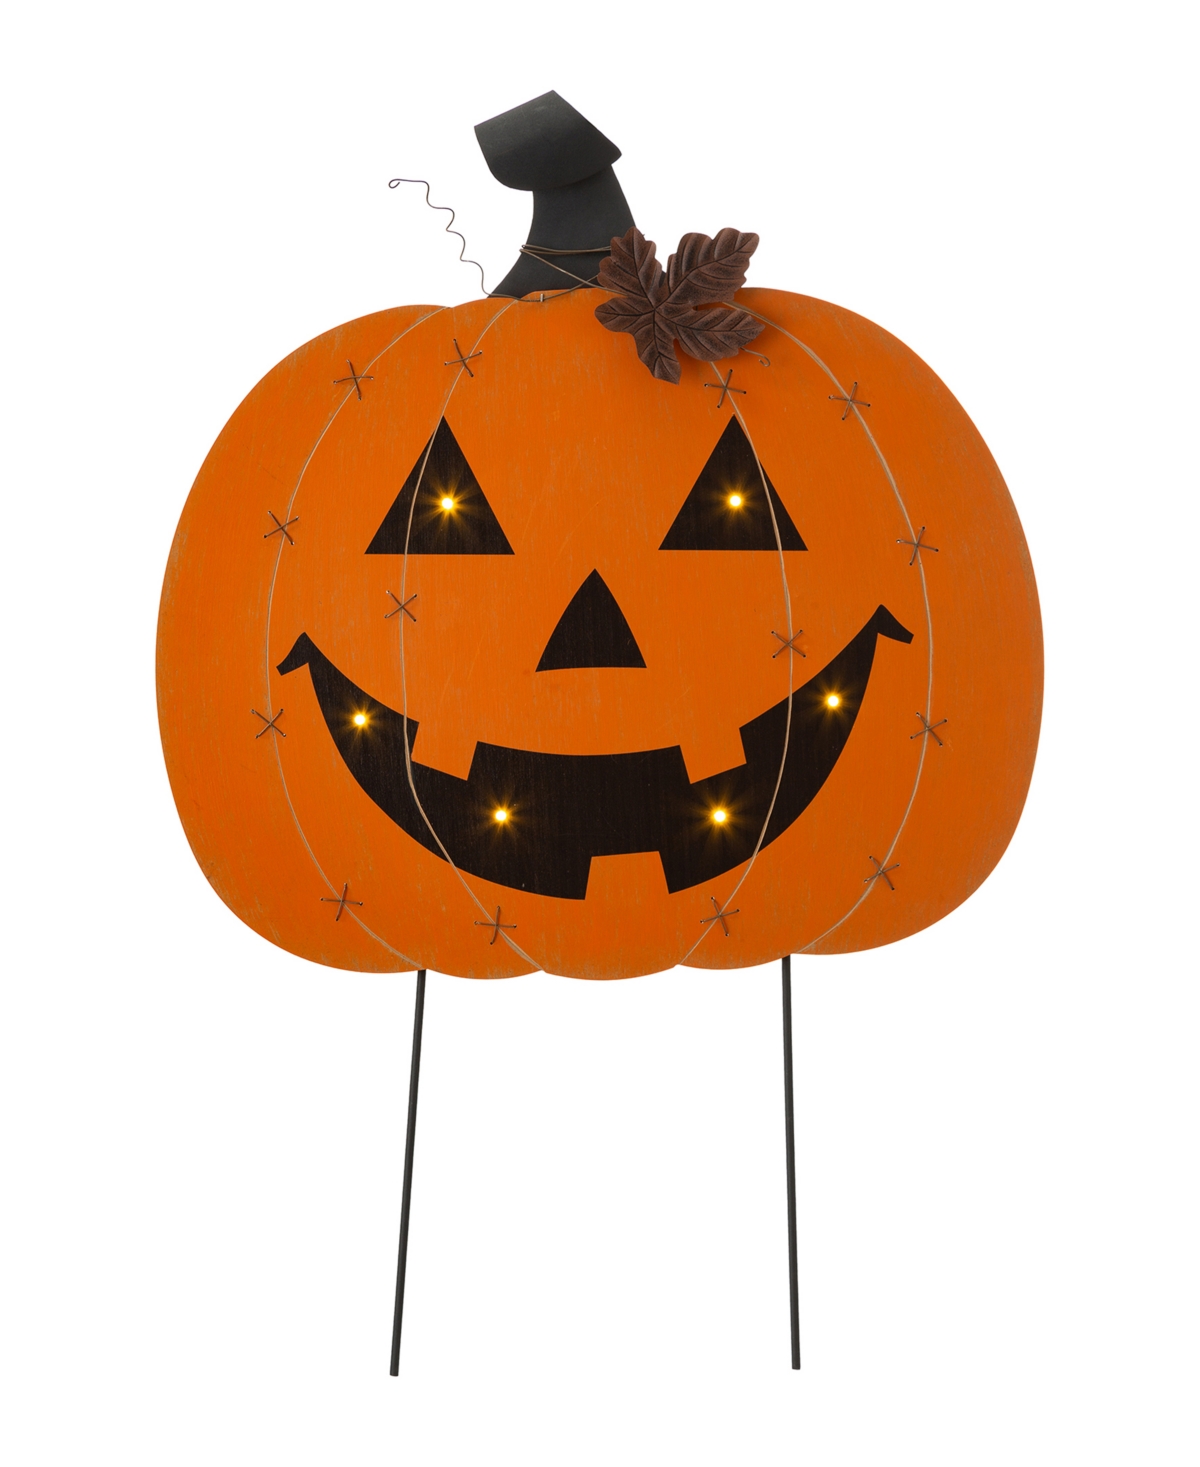 30" H Halloween Wooden Metal Pumpkin Stake or Wall Decor - Multi